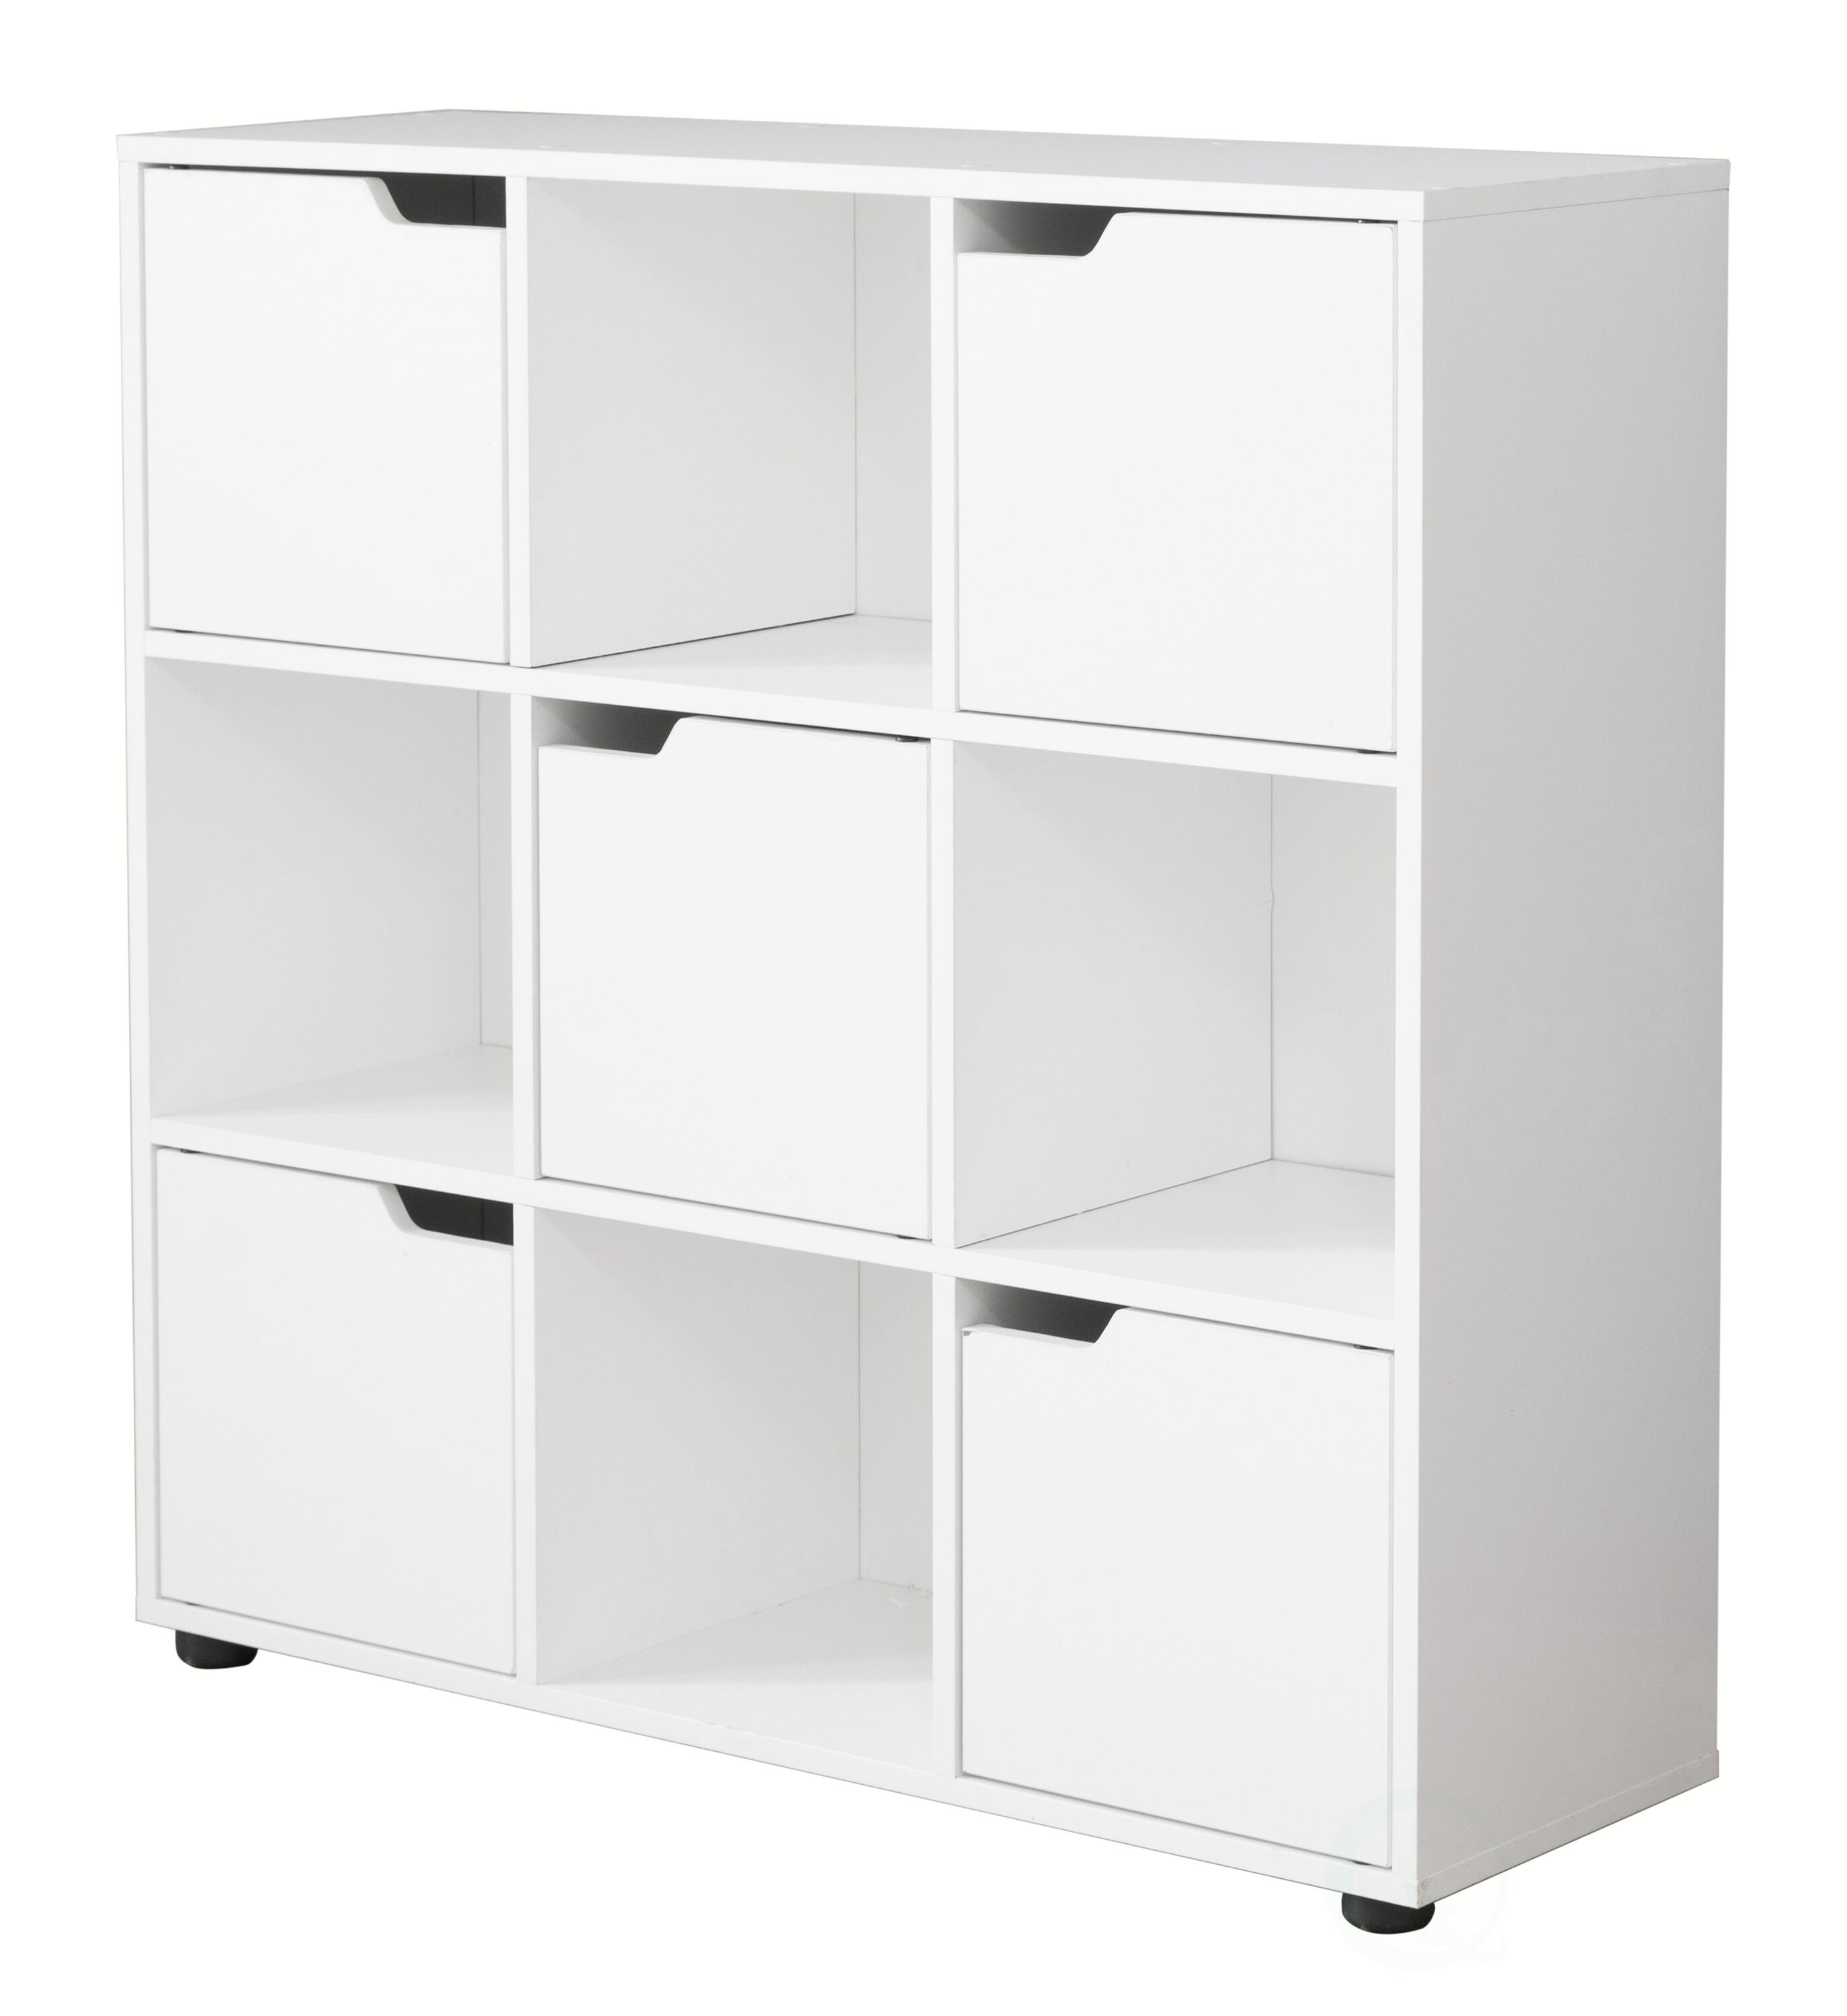 6 9 Wooden Cube Storage Unit Display Shelves Cupboard Doors Bookcase Shelving 